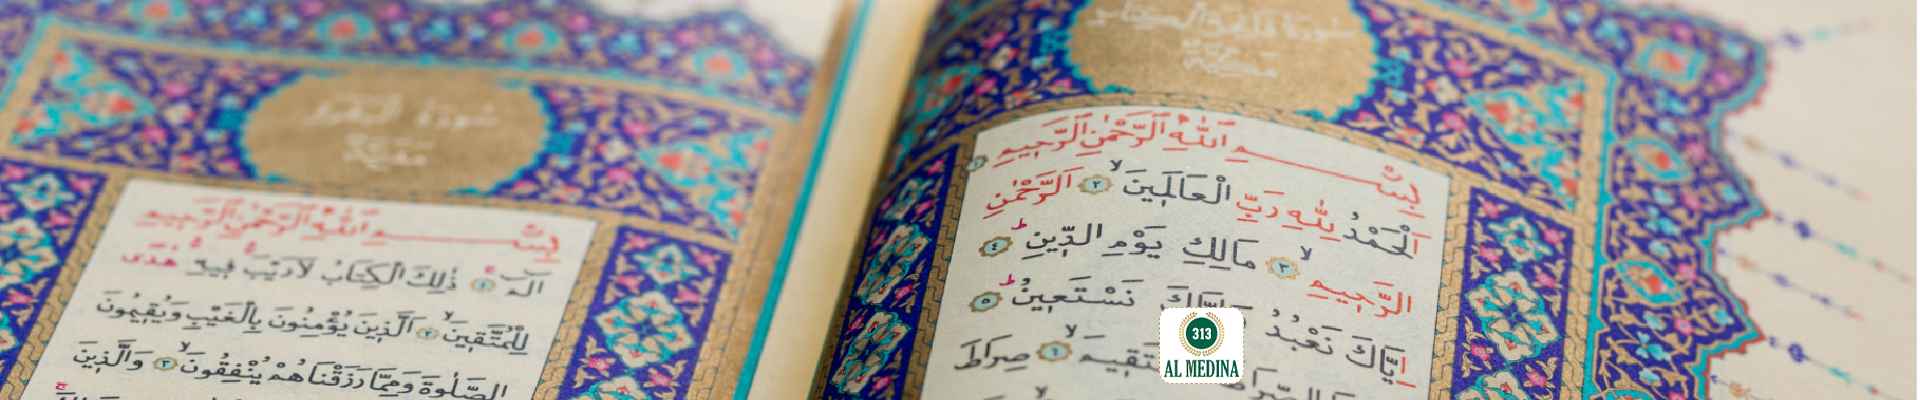 interpret verses of Quran describing Allah